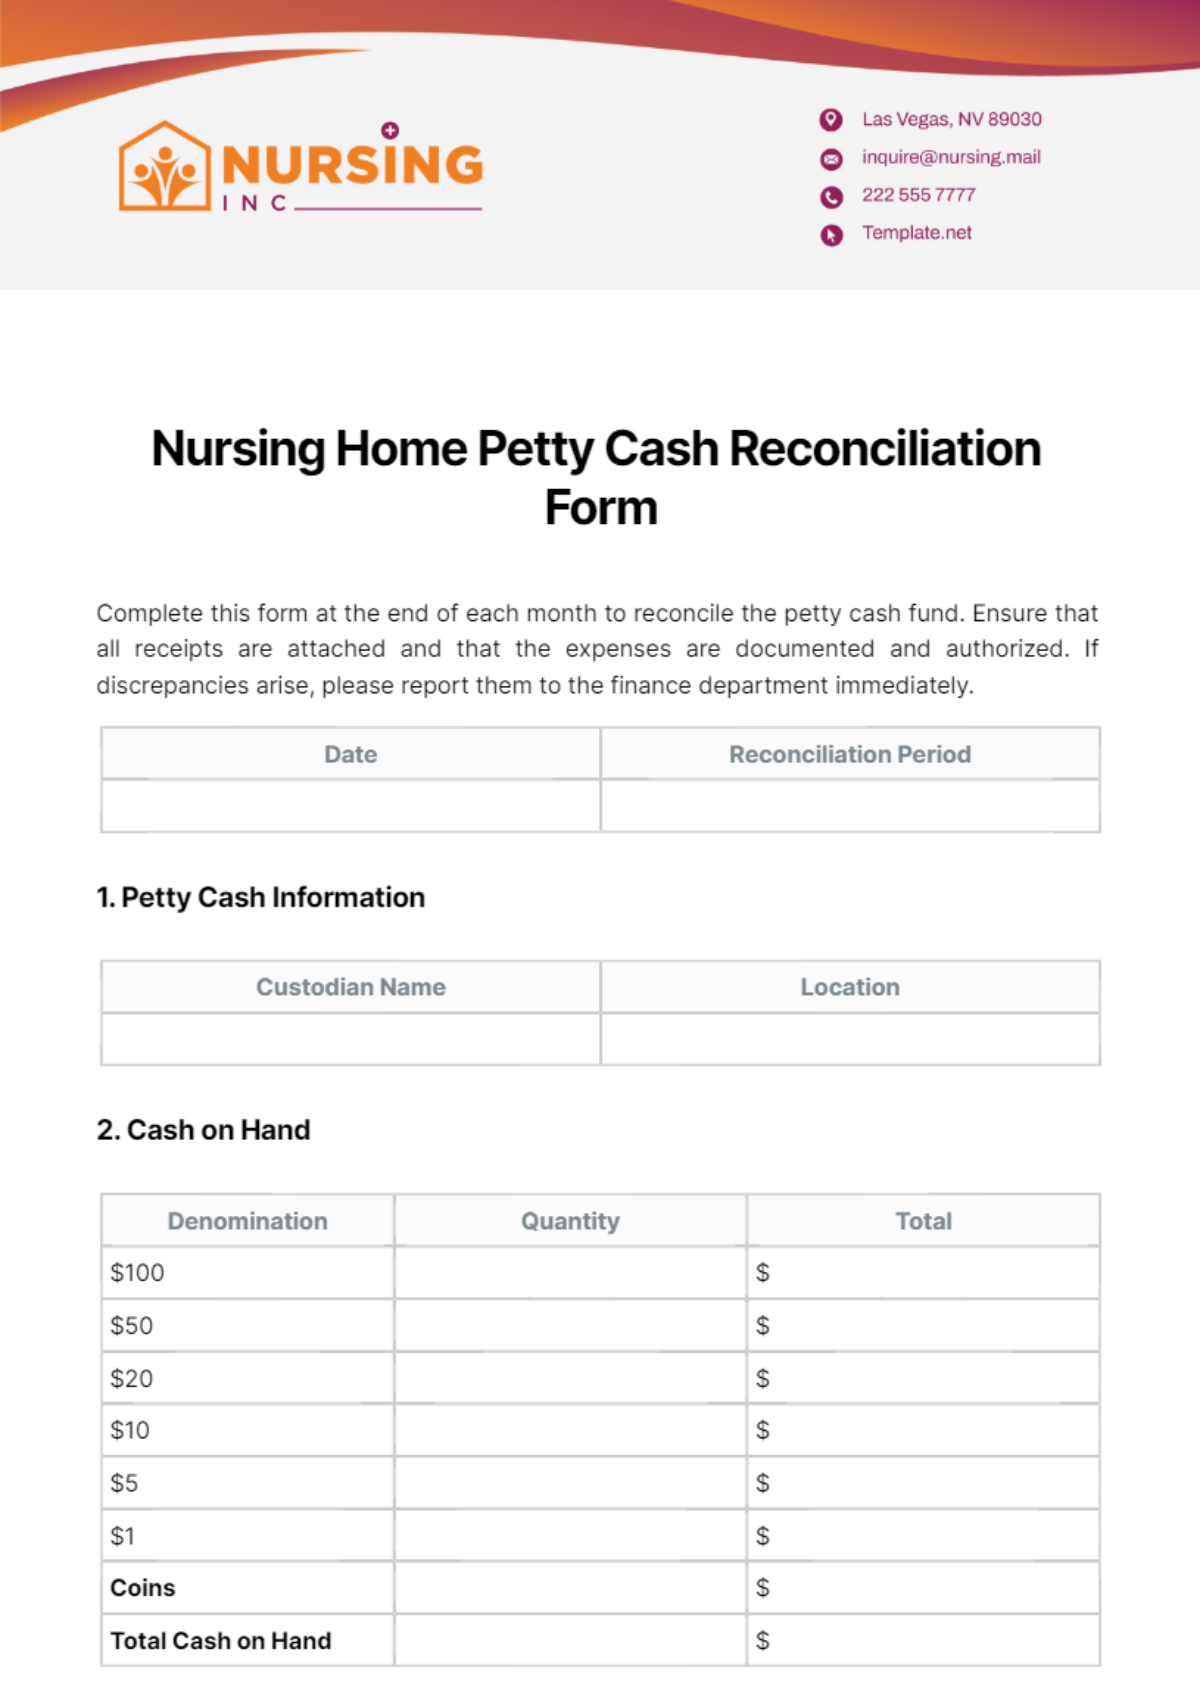 Free Nursing Home Petty Cash Reconciliation Form Template